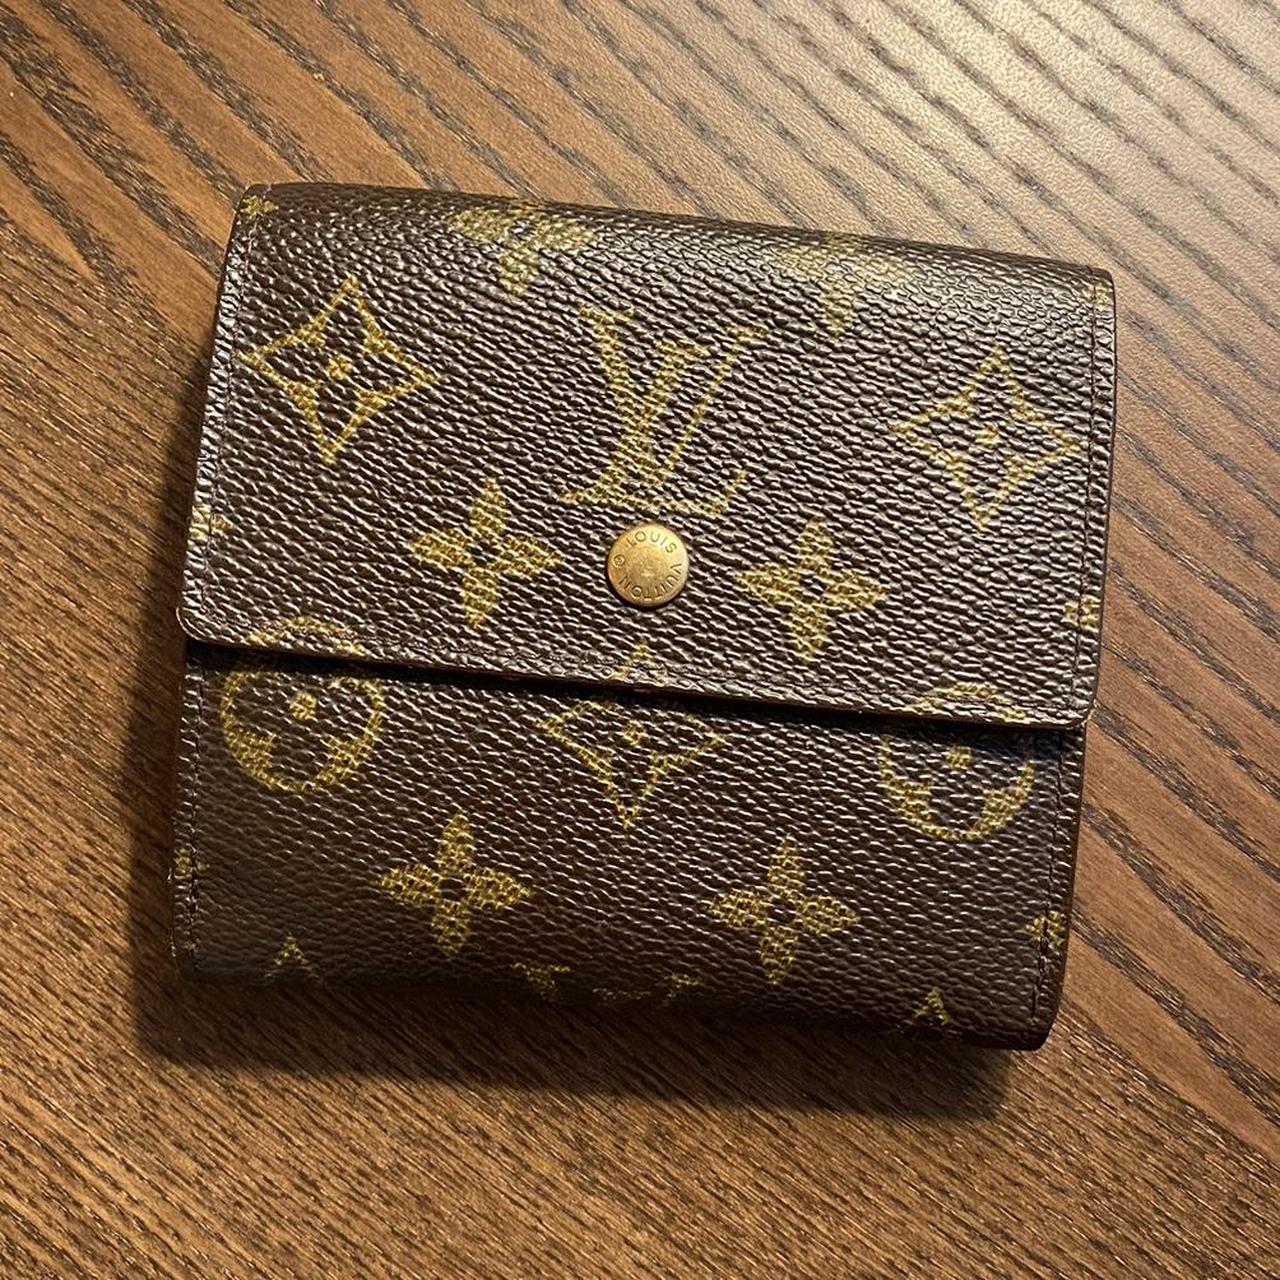 Authentic Louis Vuitton monogram wallet 🩷 so roomy